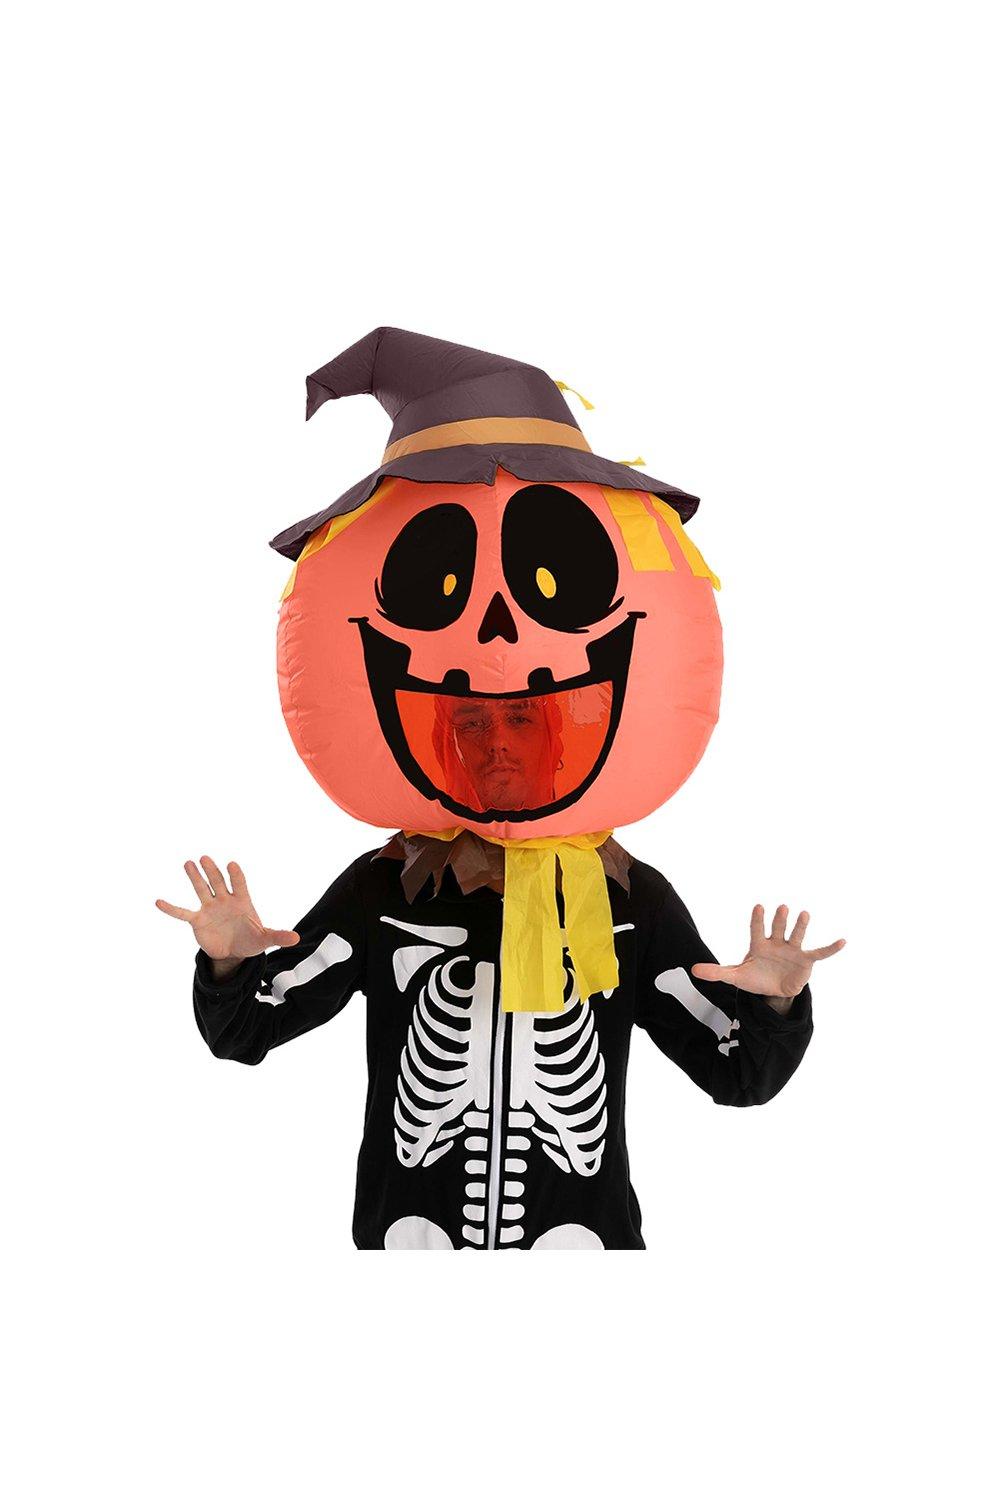 Pumpkin Bobble Head Inflatable Costume Halloween